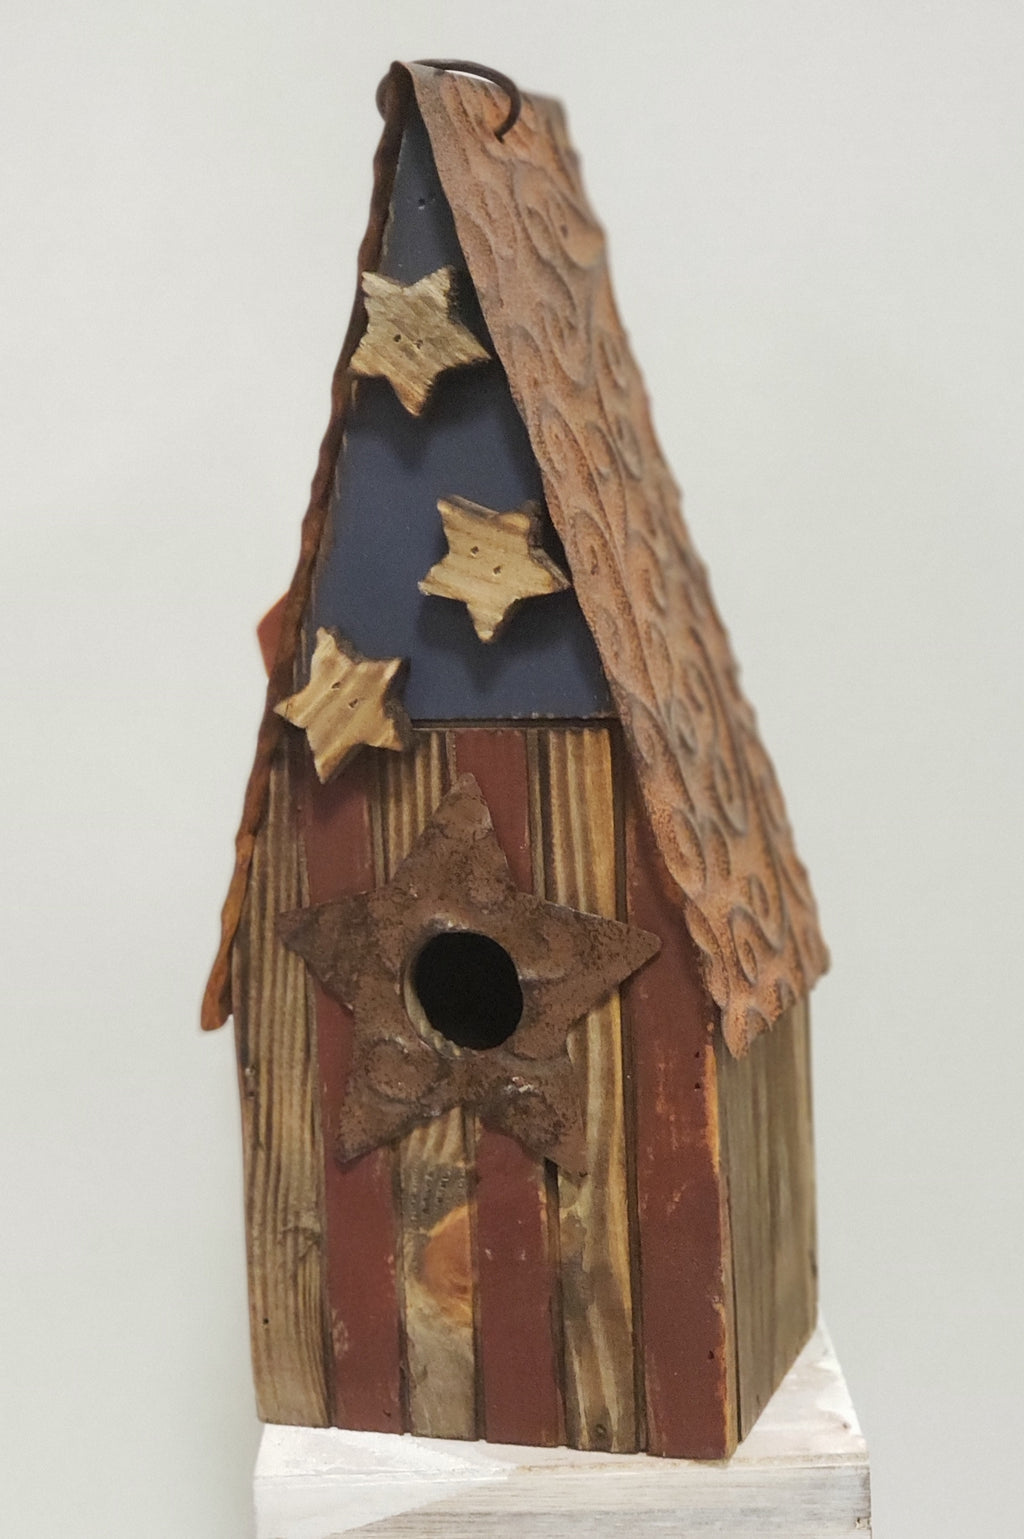 Patriotic Birdhouse